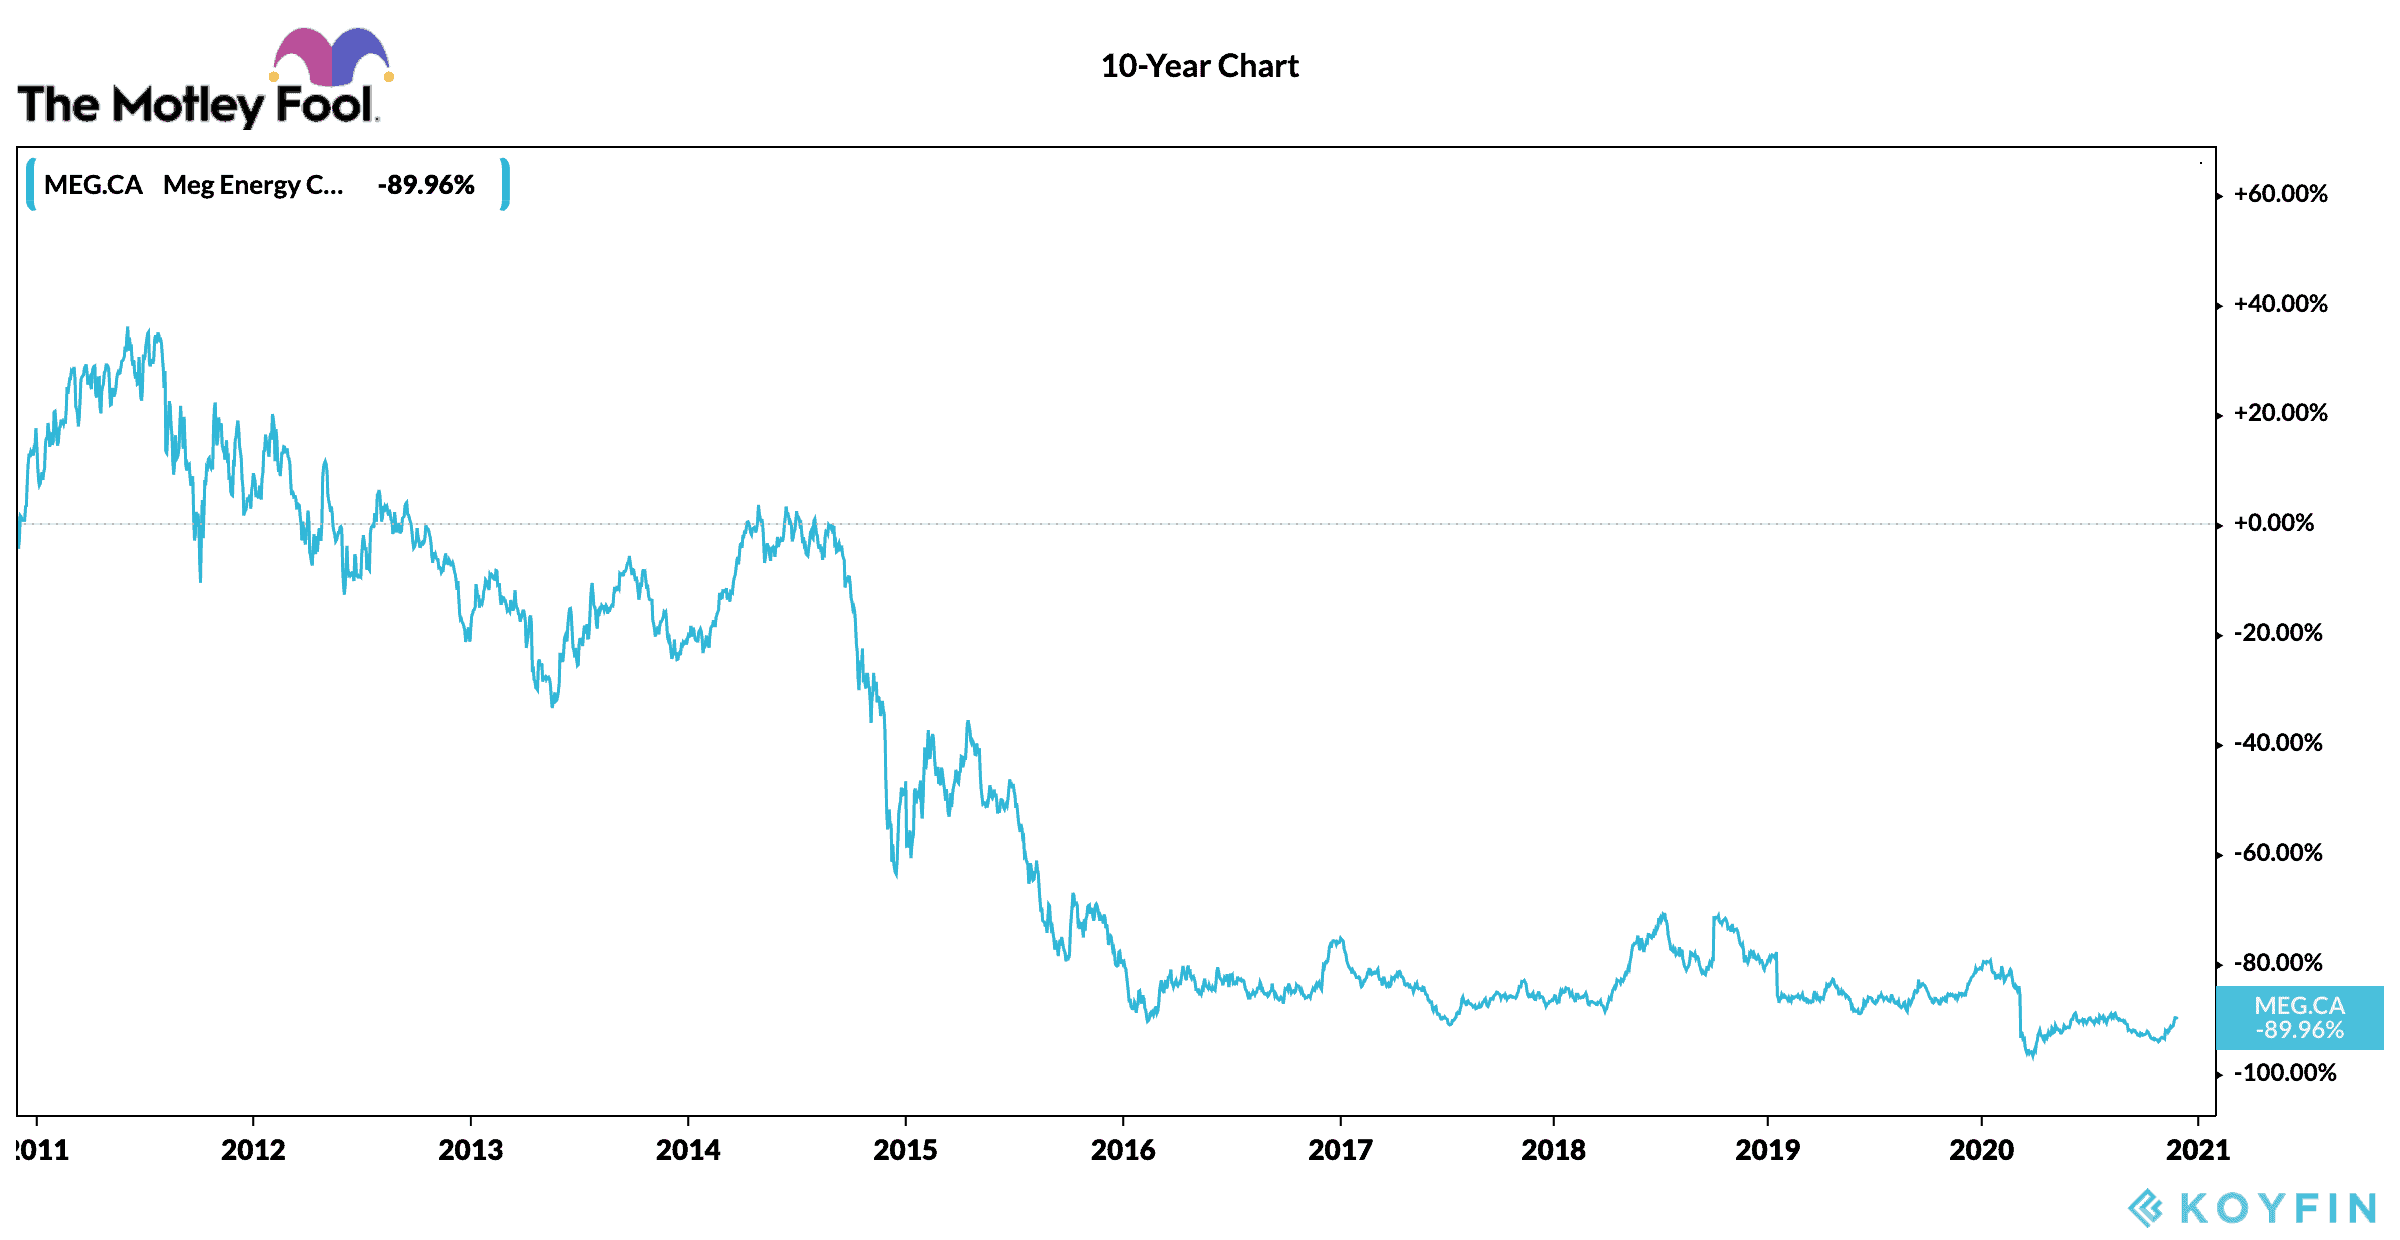 MEG stock's 10-year price chart as of Nov 27, 2020